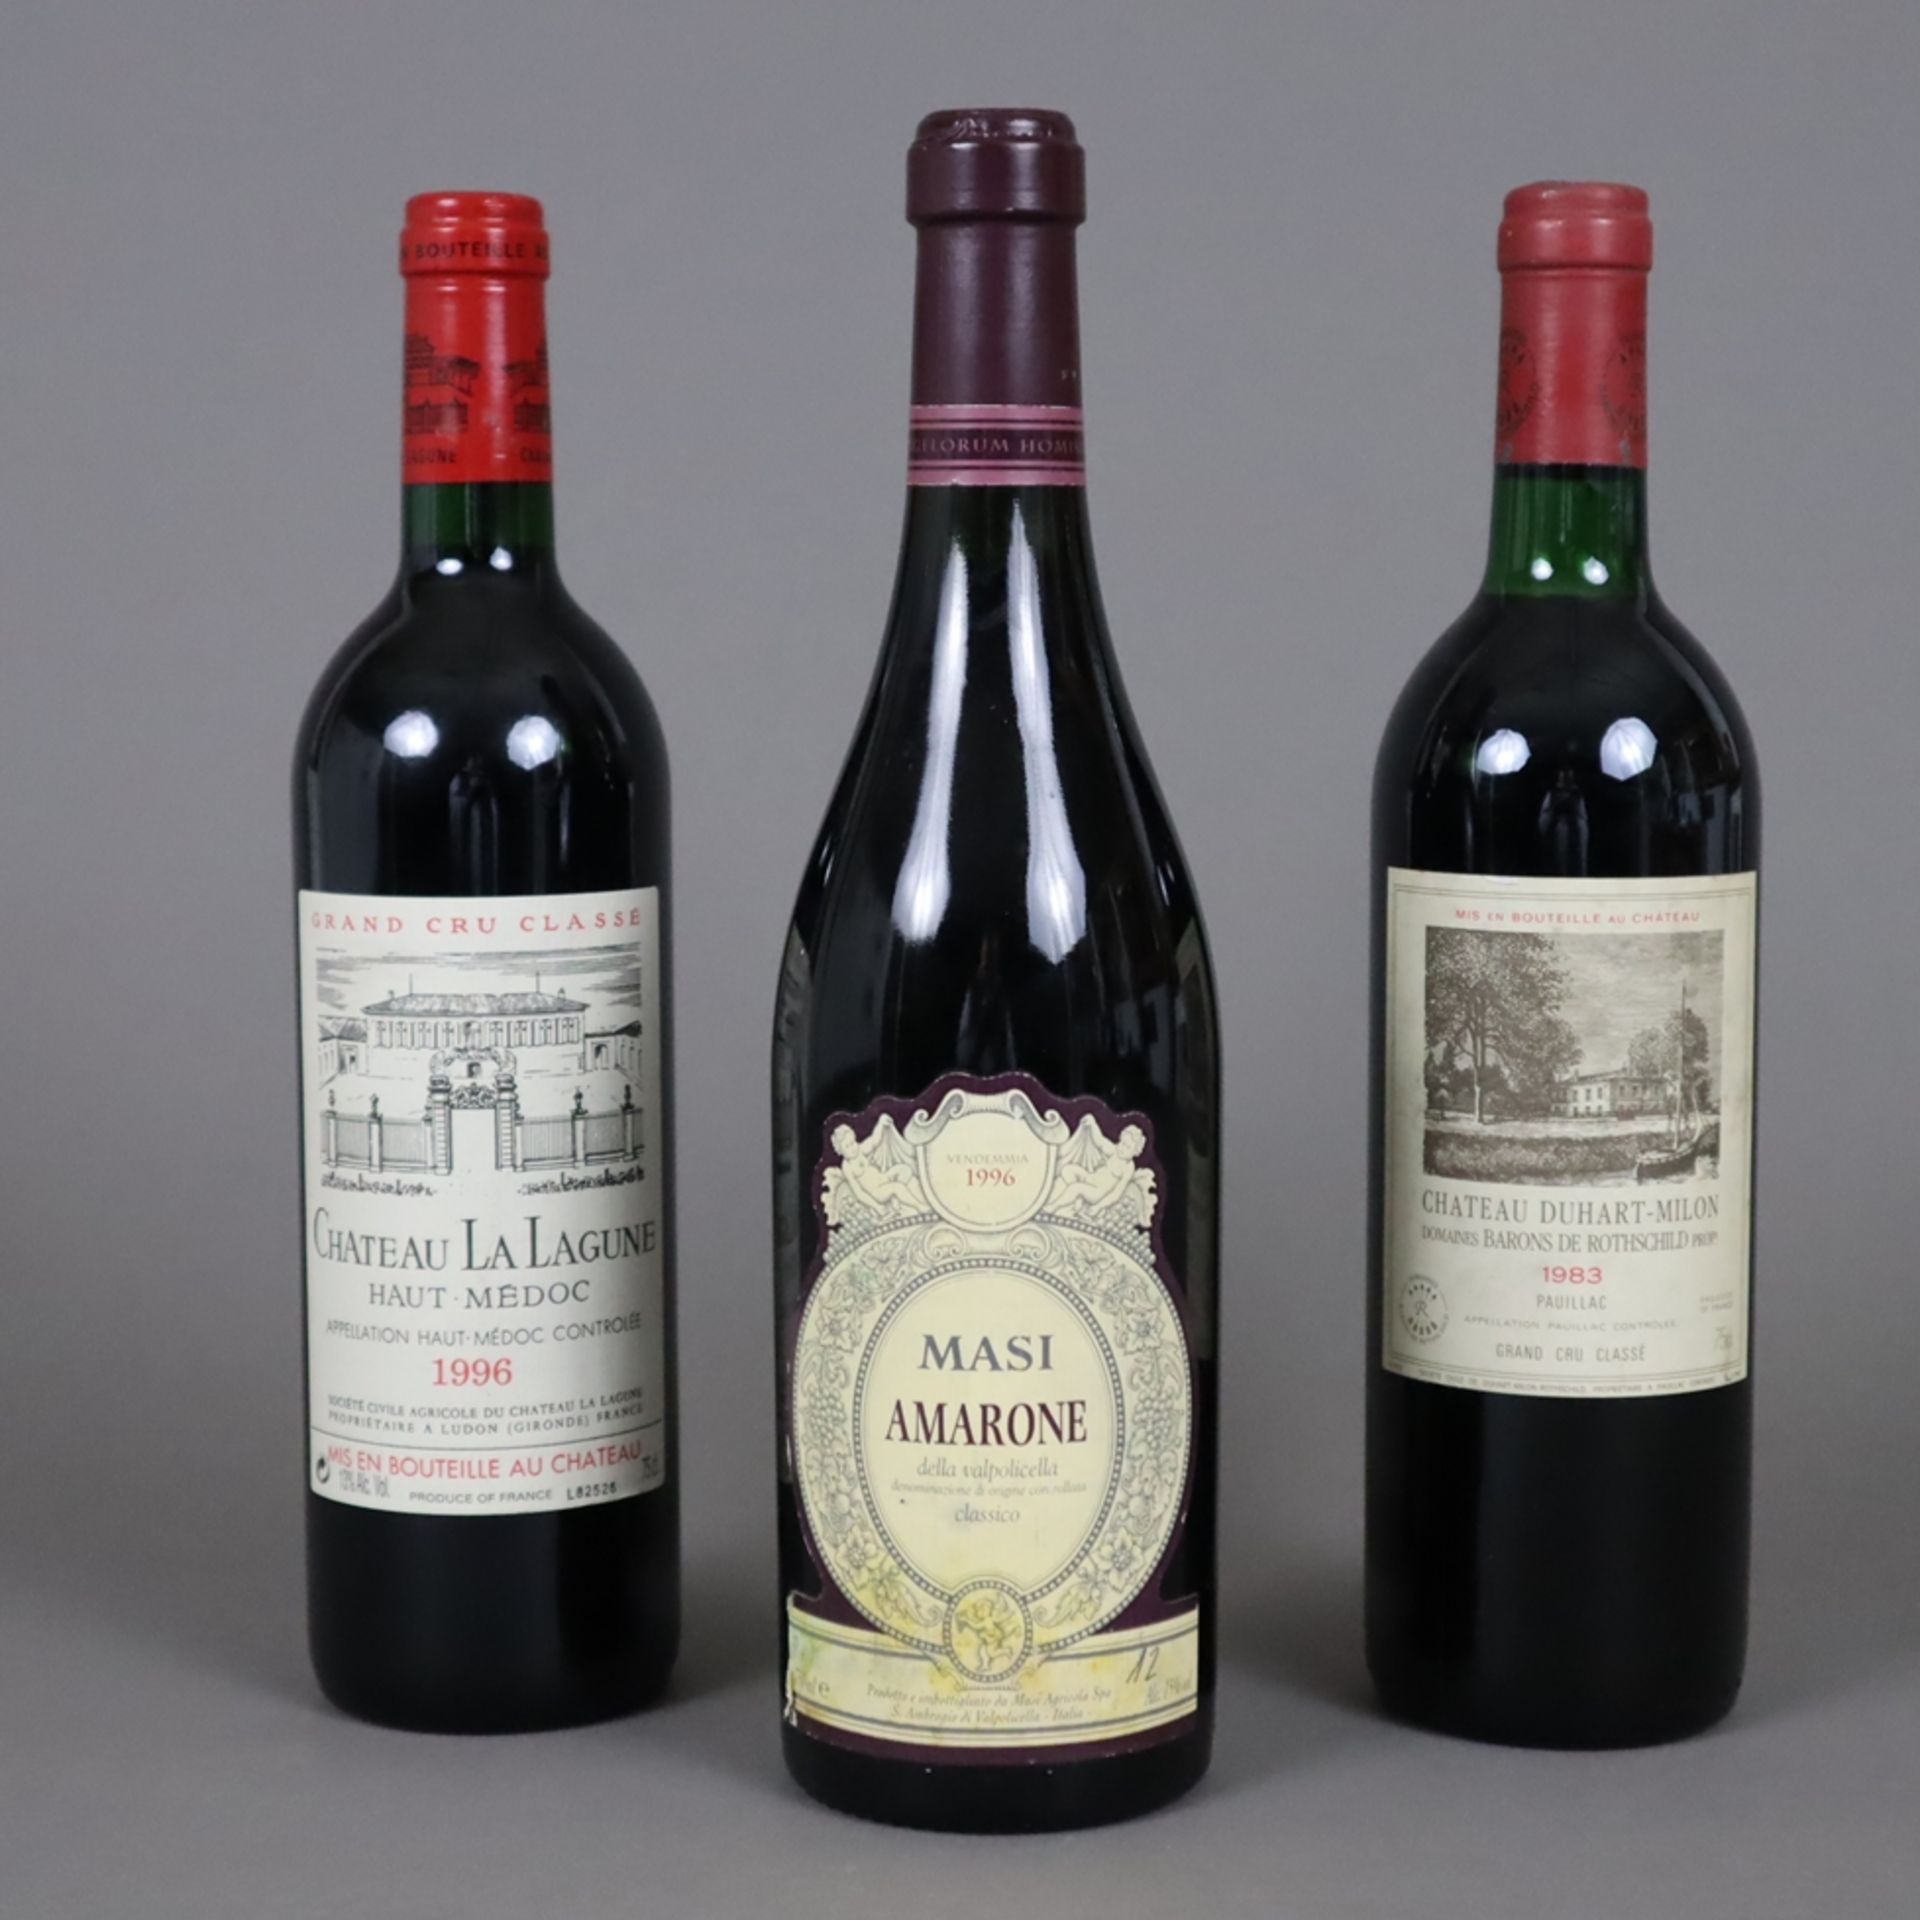 Weinkonvolut - 3 Flaschen, davon 1 Flasche Château Duhart Milon Domaines Barons de Rothschild 1983,